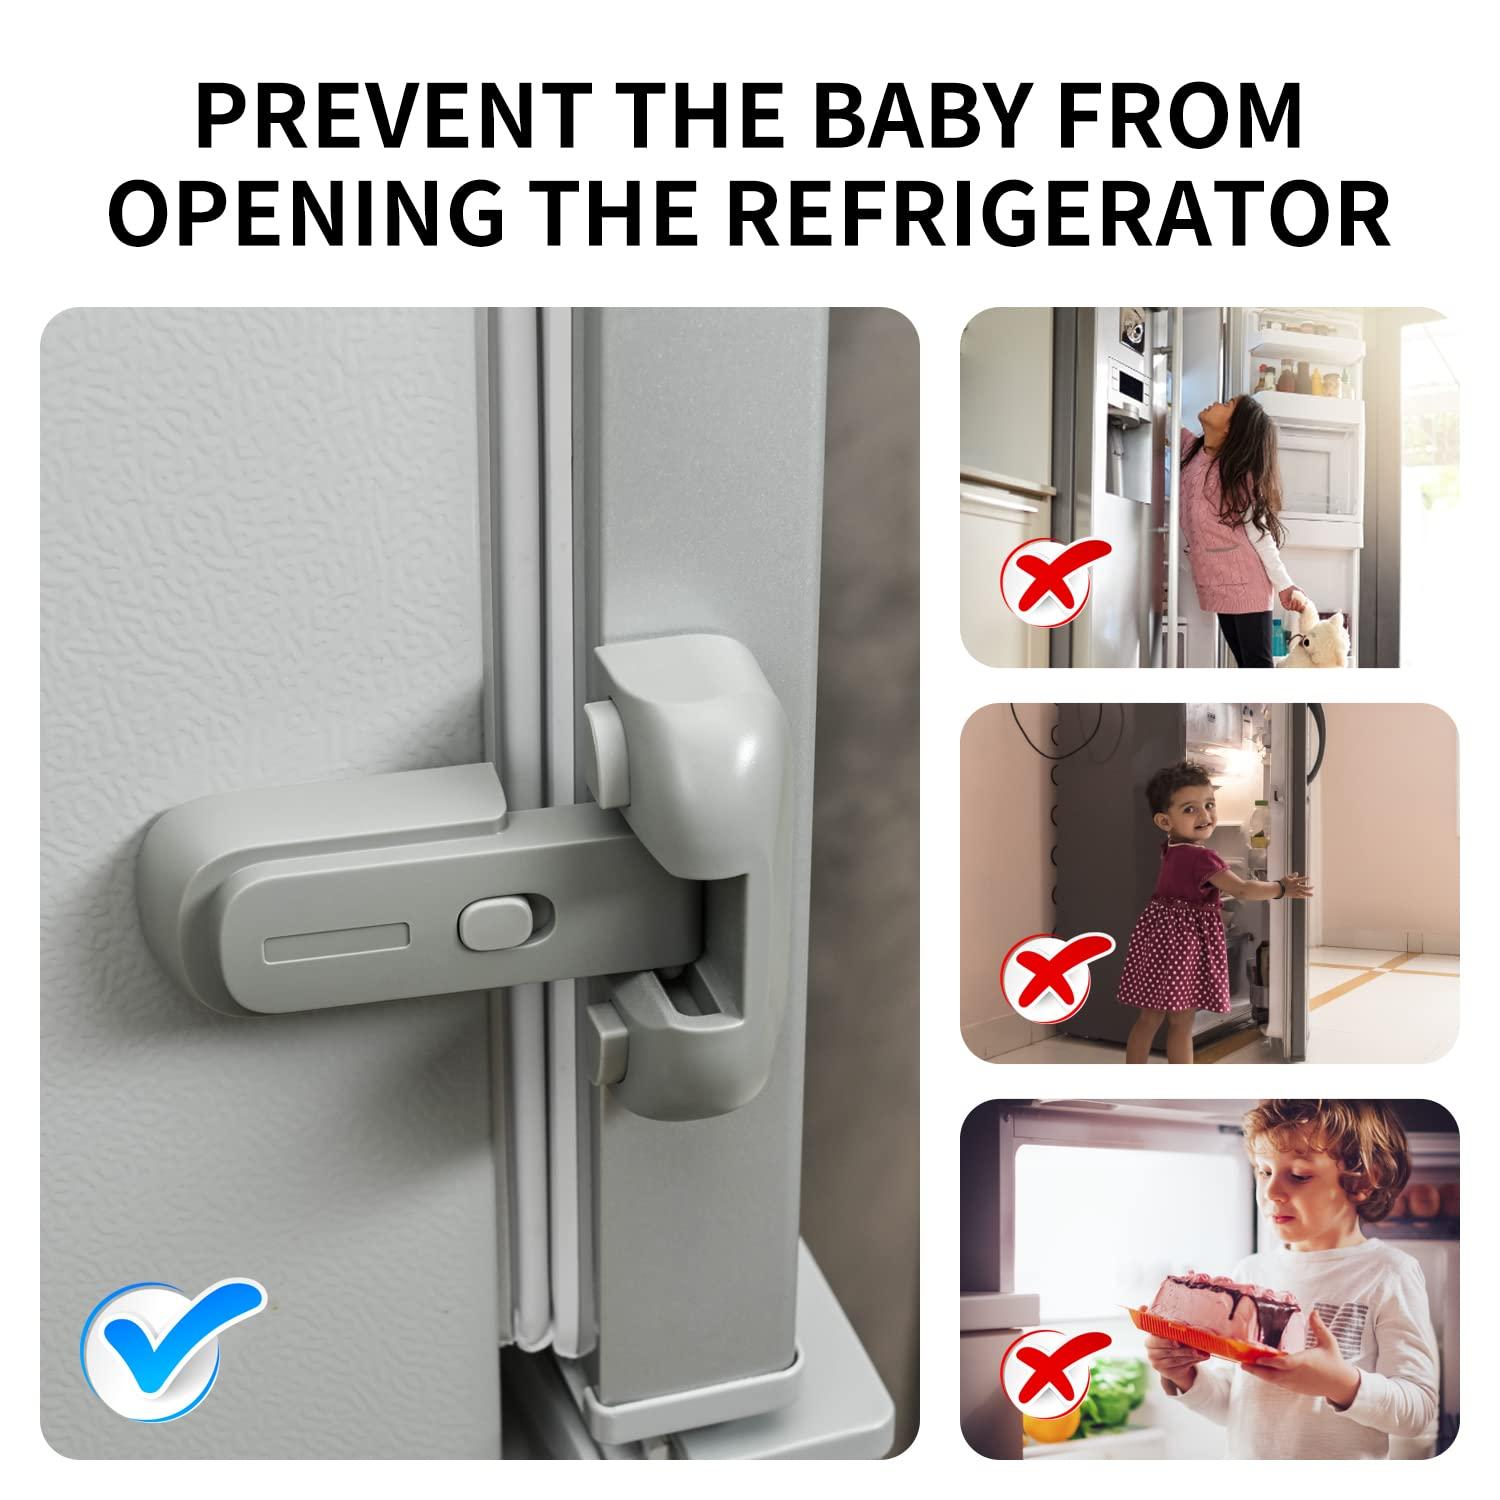 Home Refrigerator Fridge Freezer Door Lock, Latch Catch Toddler Kids Child Fridge  Locks Baby Safety Child Lock, Easy To Install And Use 3m Adhesive No